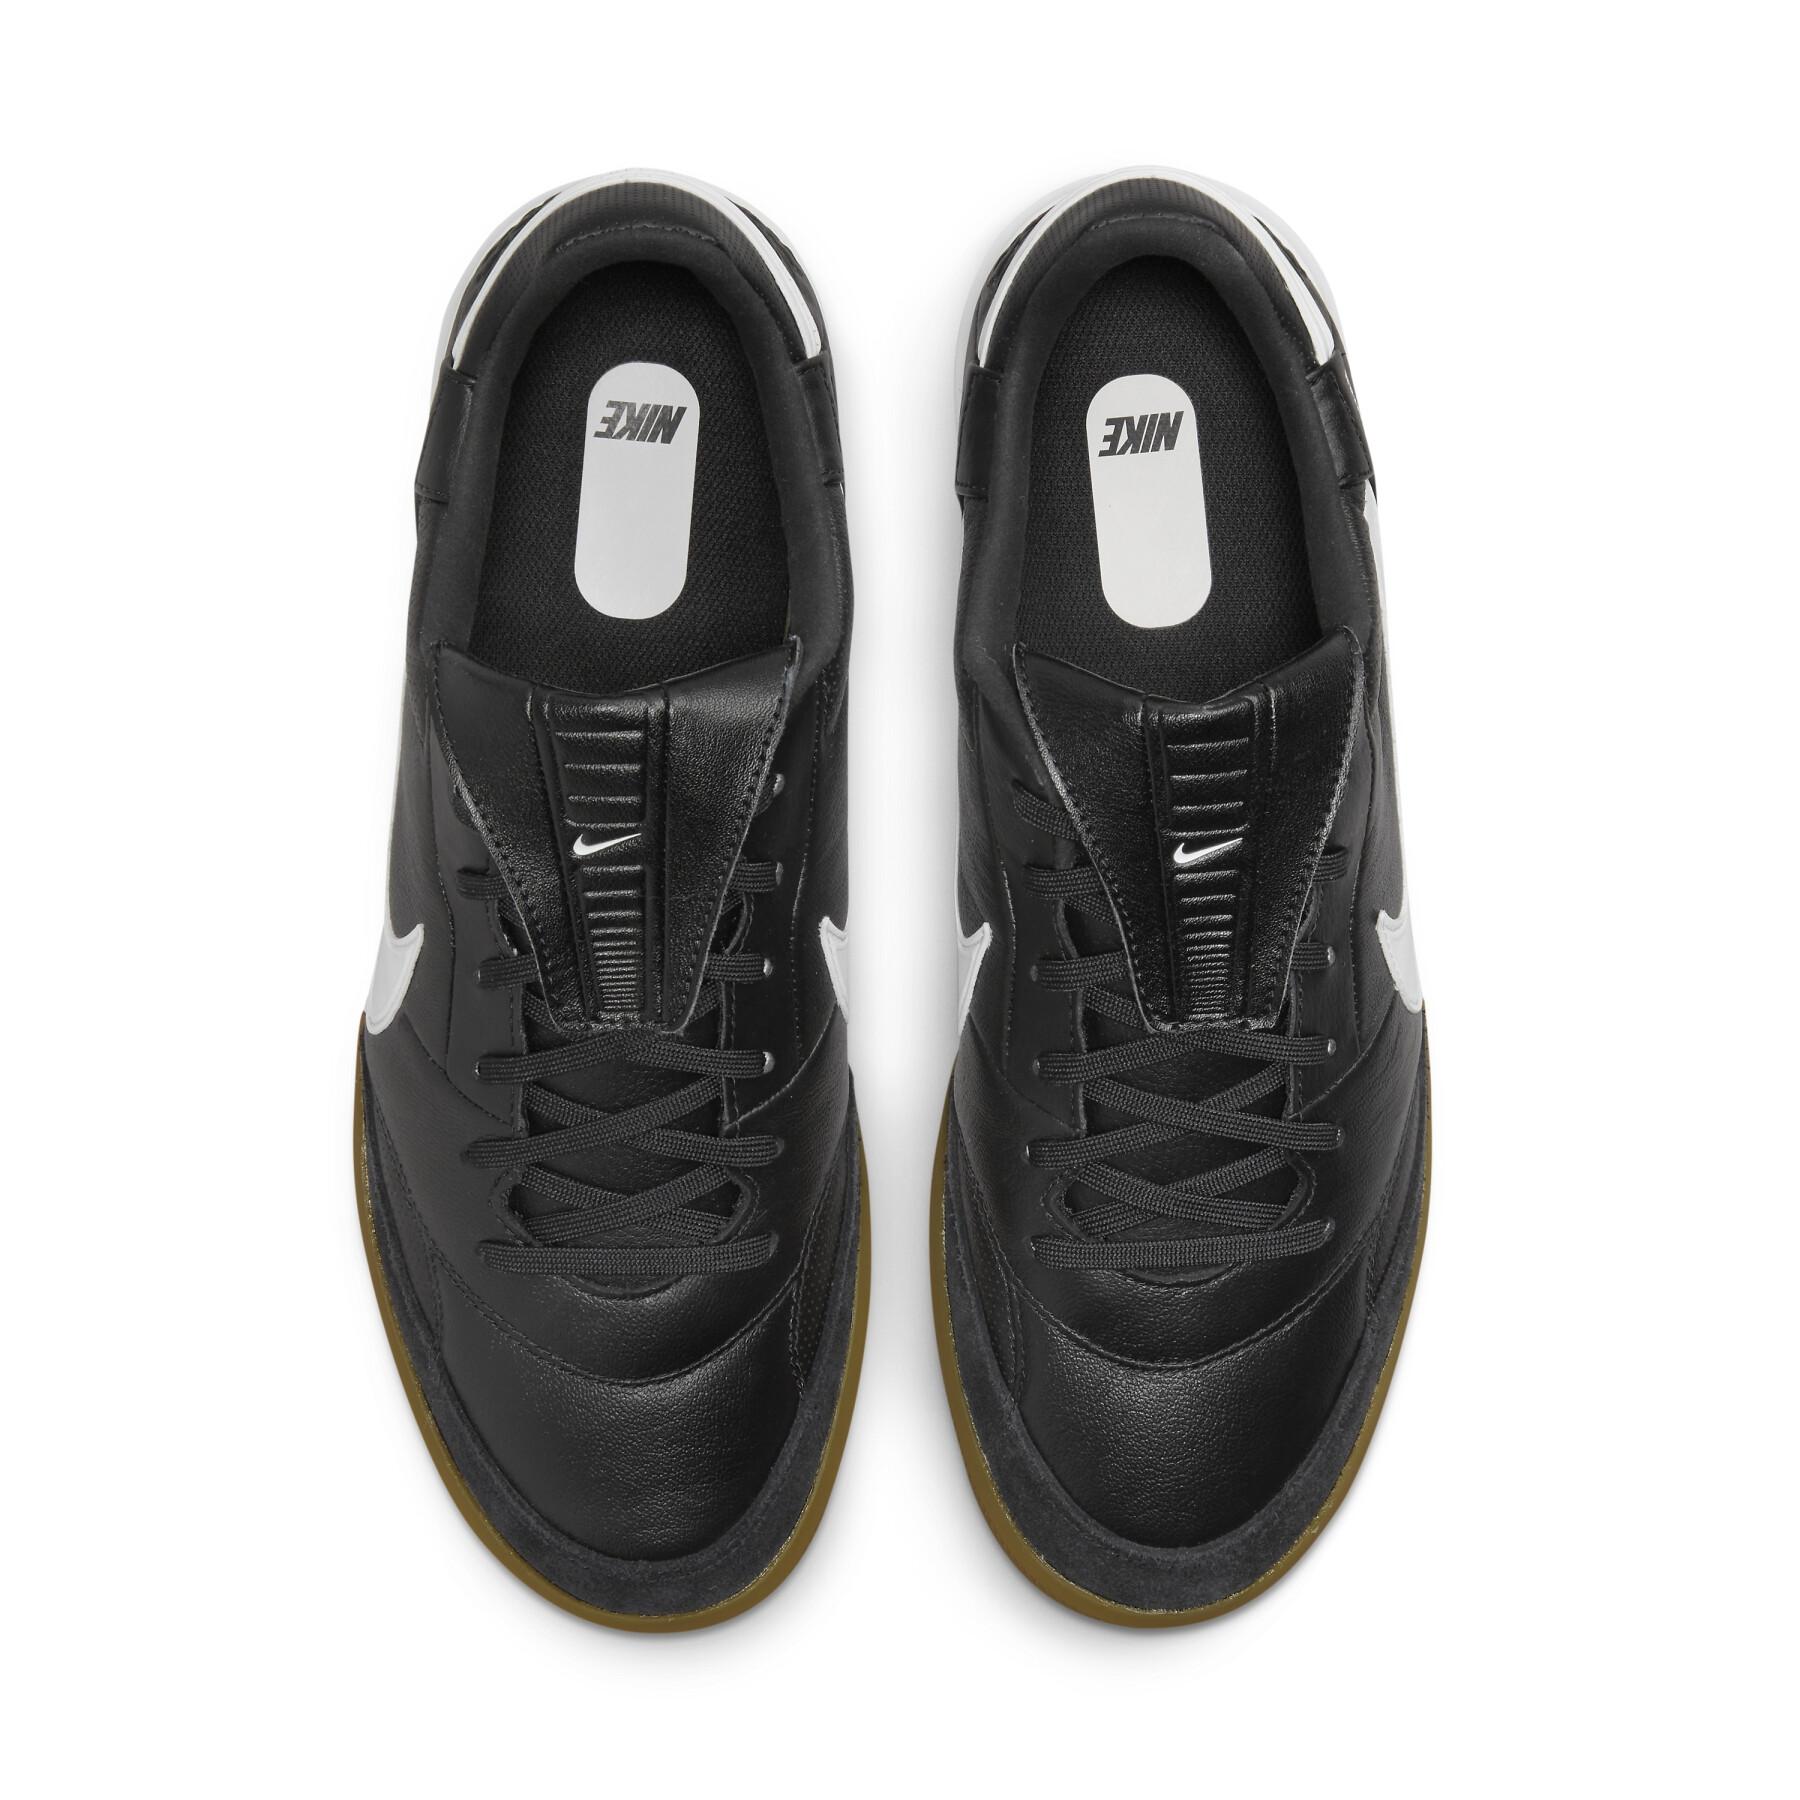 Chaussures de football Nike Premier 3 IC